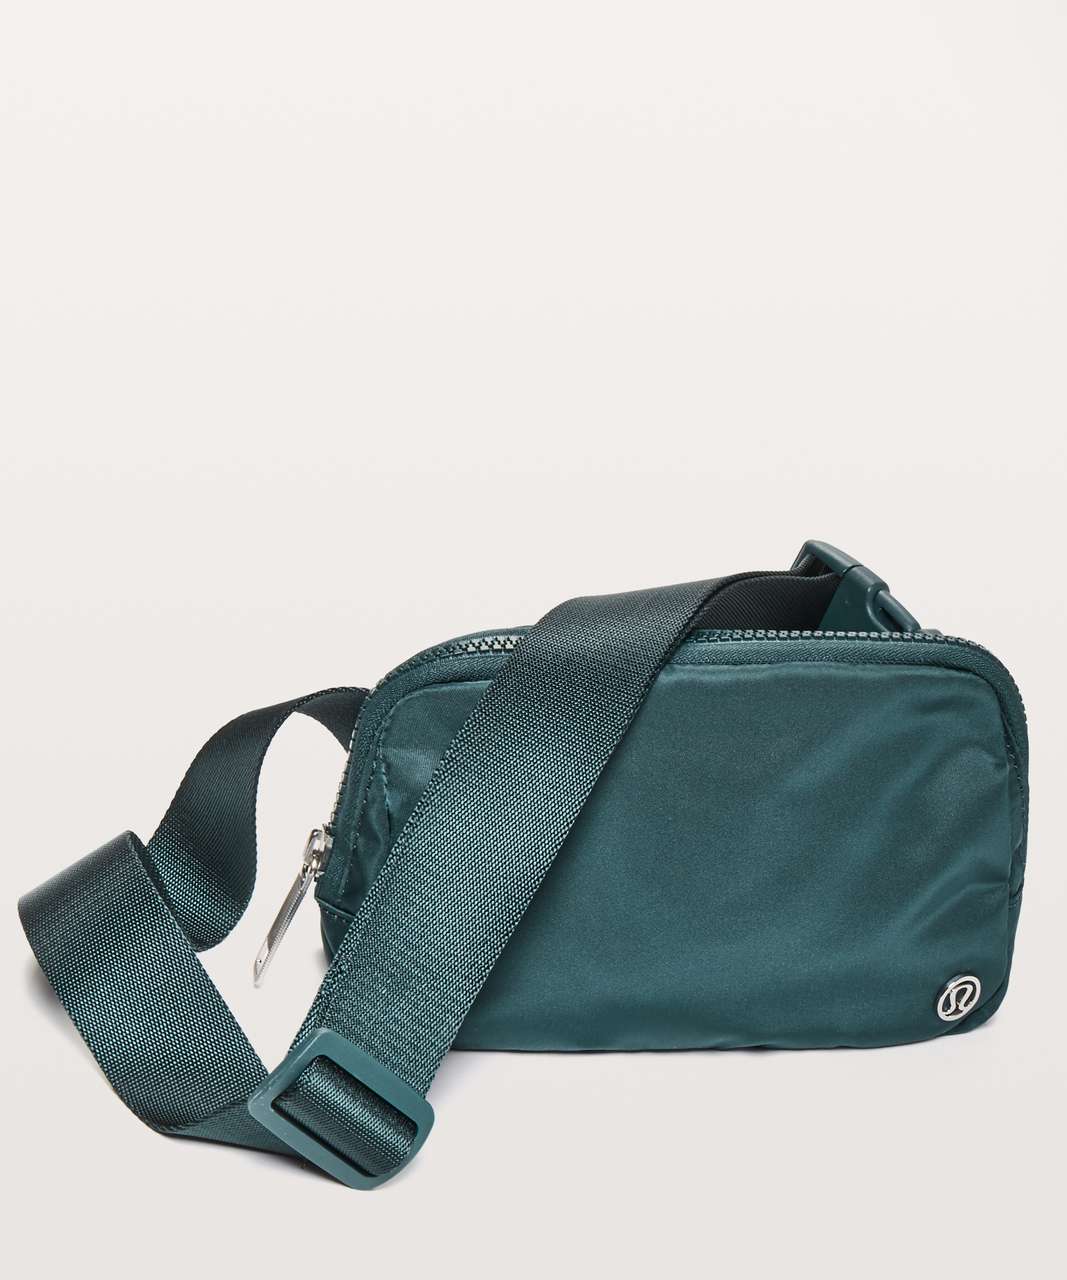 Lululemon Everywhere Belt Bag Unbagging - New Color!!! 